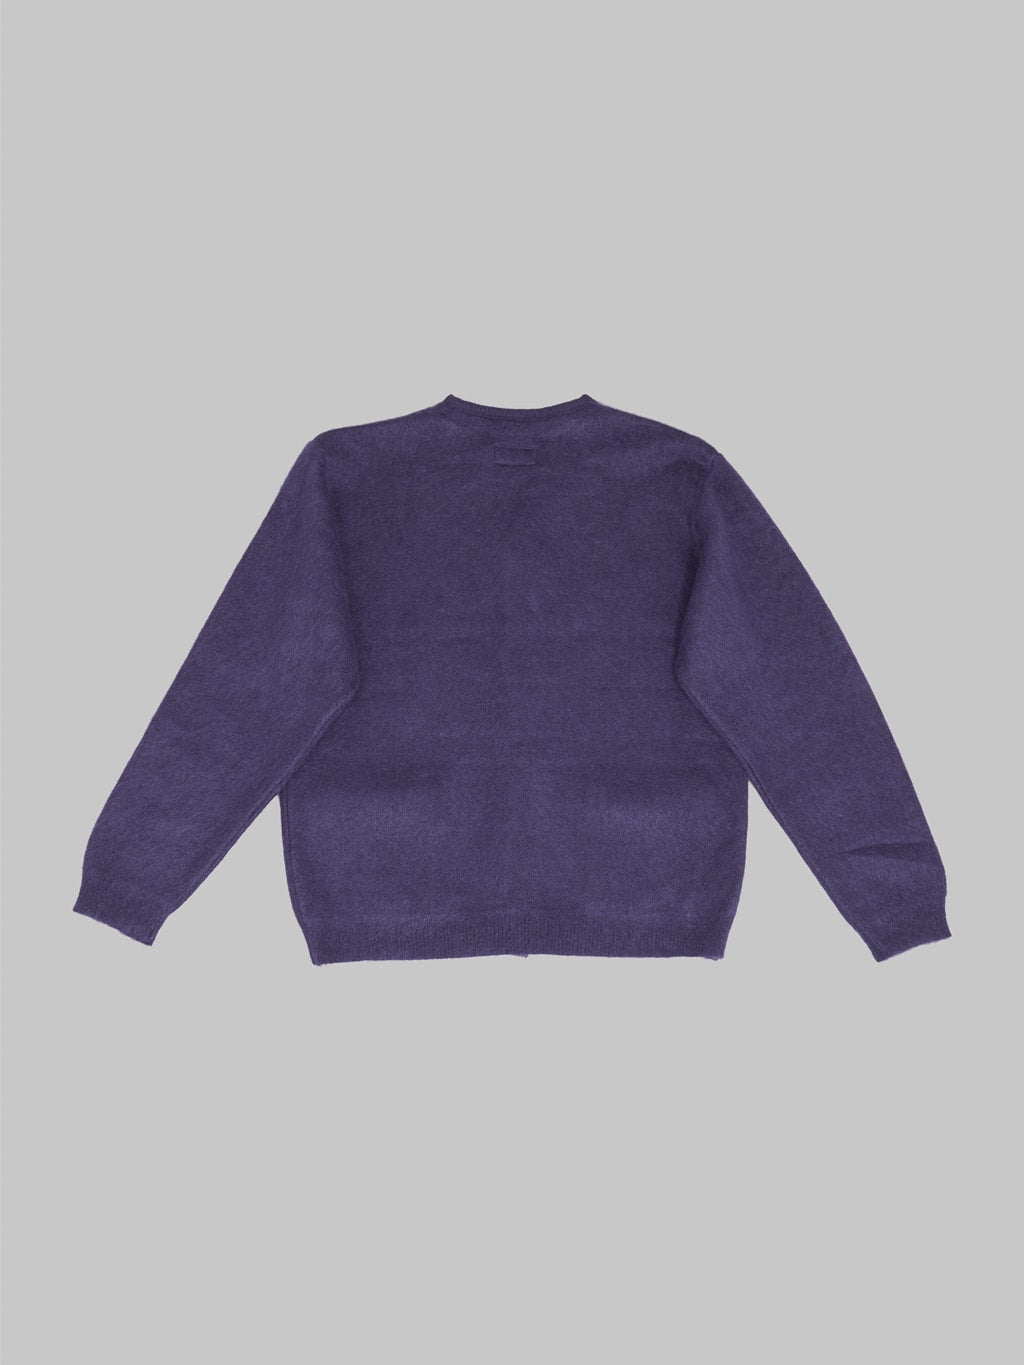 Trophy Clothing Mohair Knit Cardigan Dark Purple back